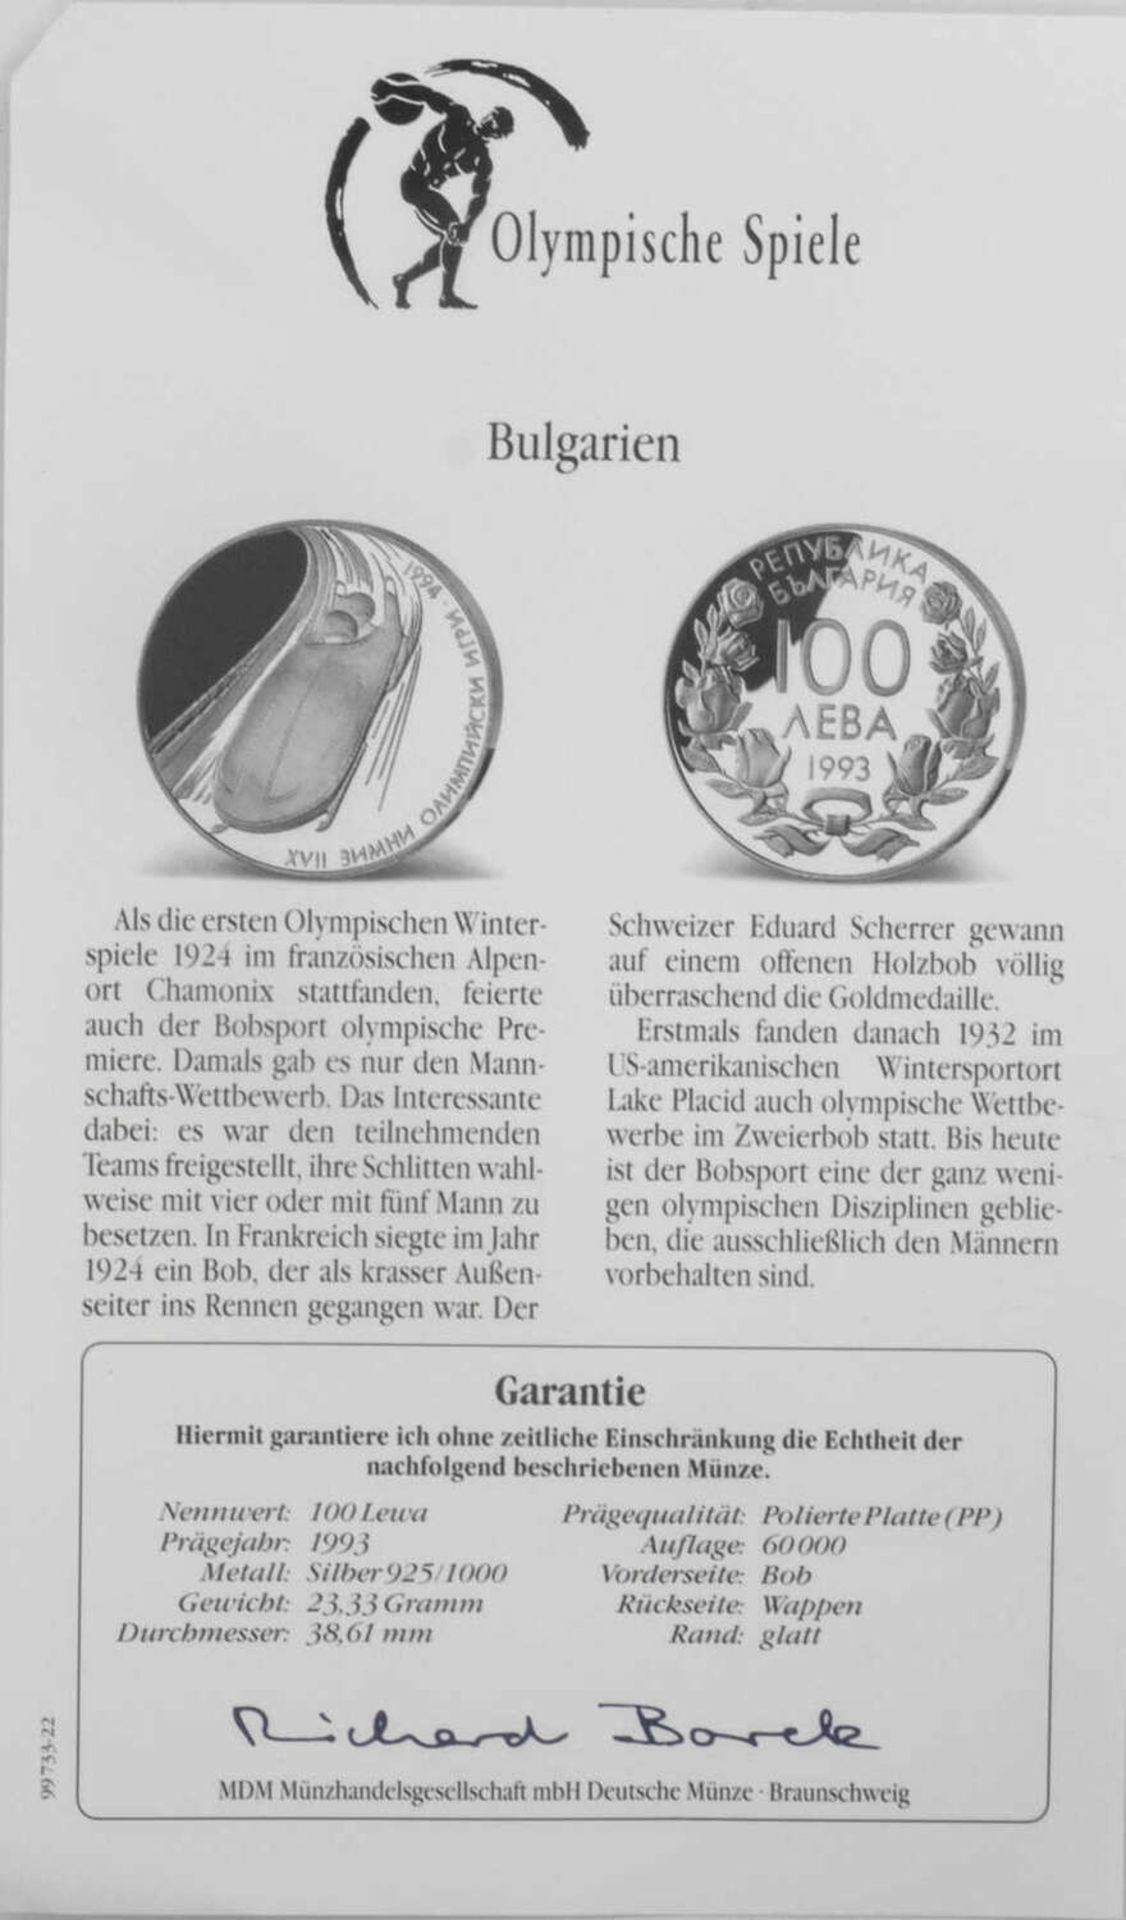 Olympische Spiele Bulgarien, 100 Lewa, 925/1000 Silber. Bob. Mit Zertifikat.Olympic Games Bulgaria, - Image 3 of 3